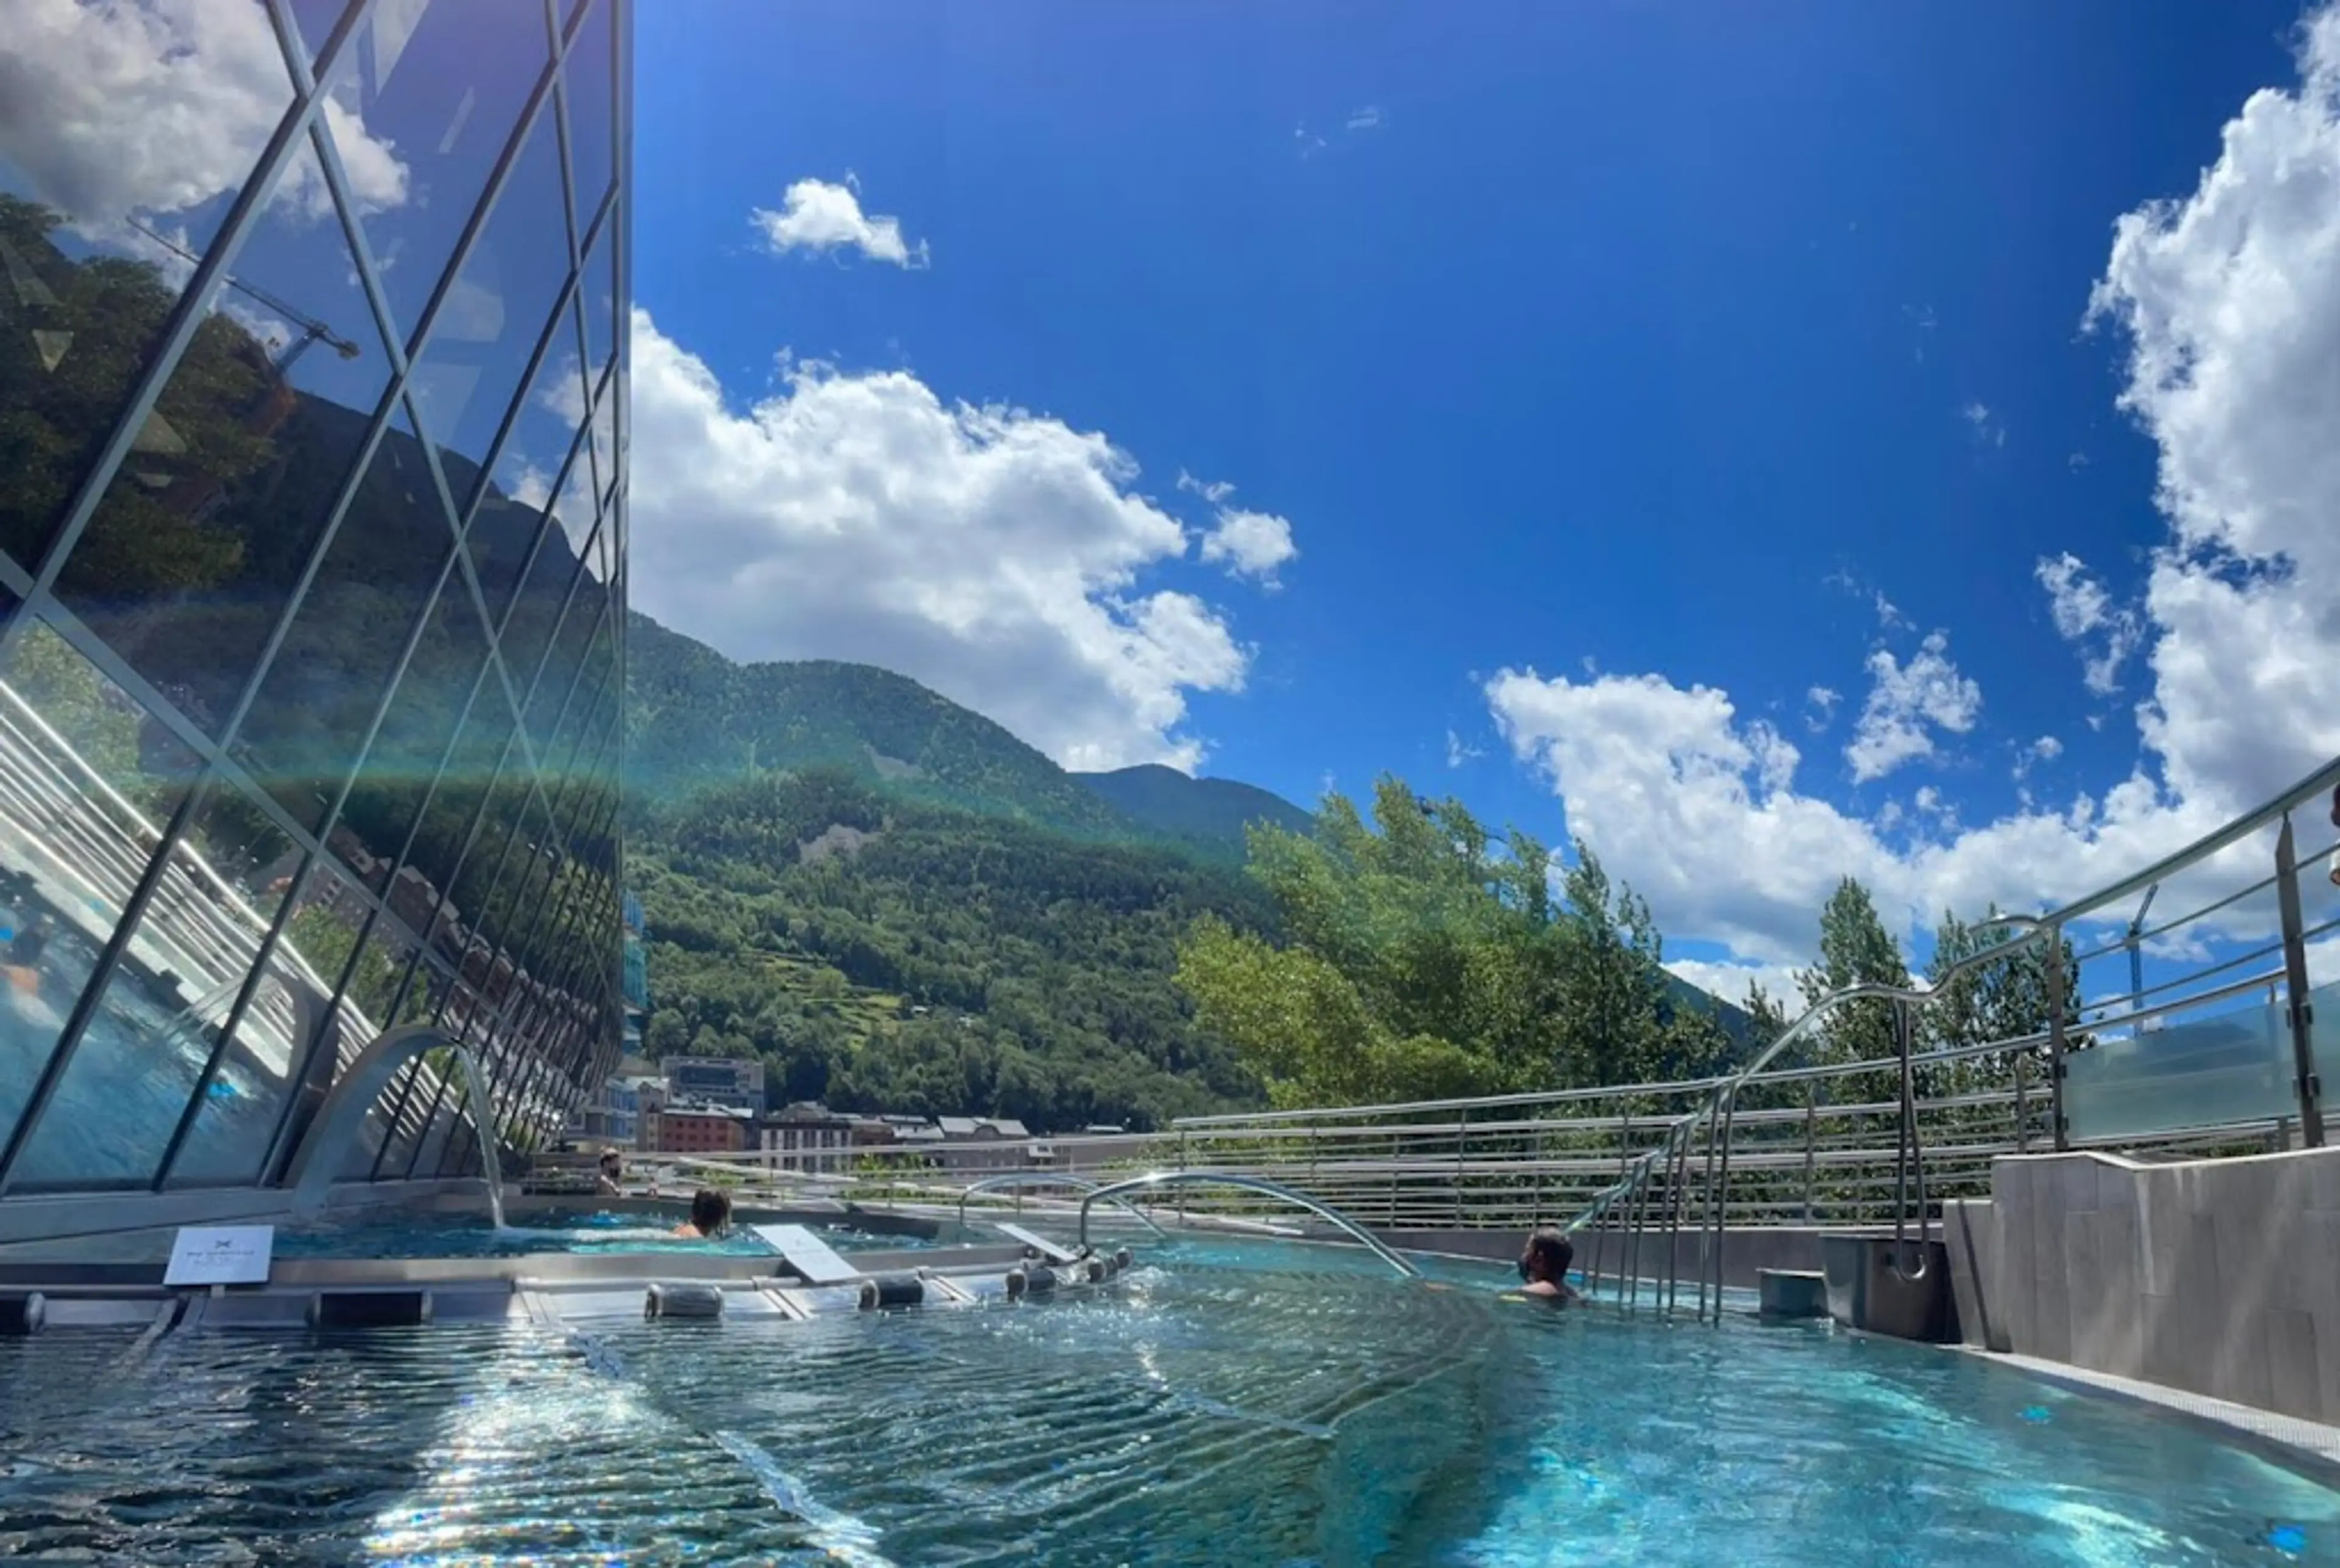 Andorra's Hot Springs